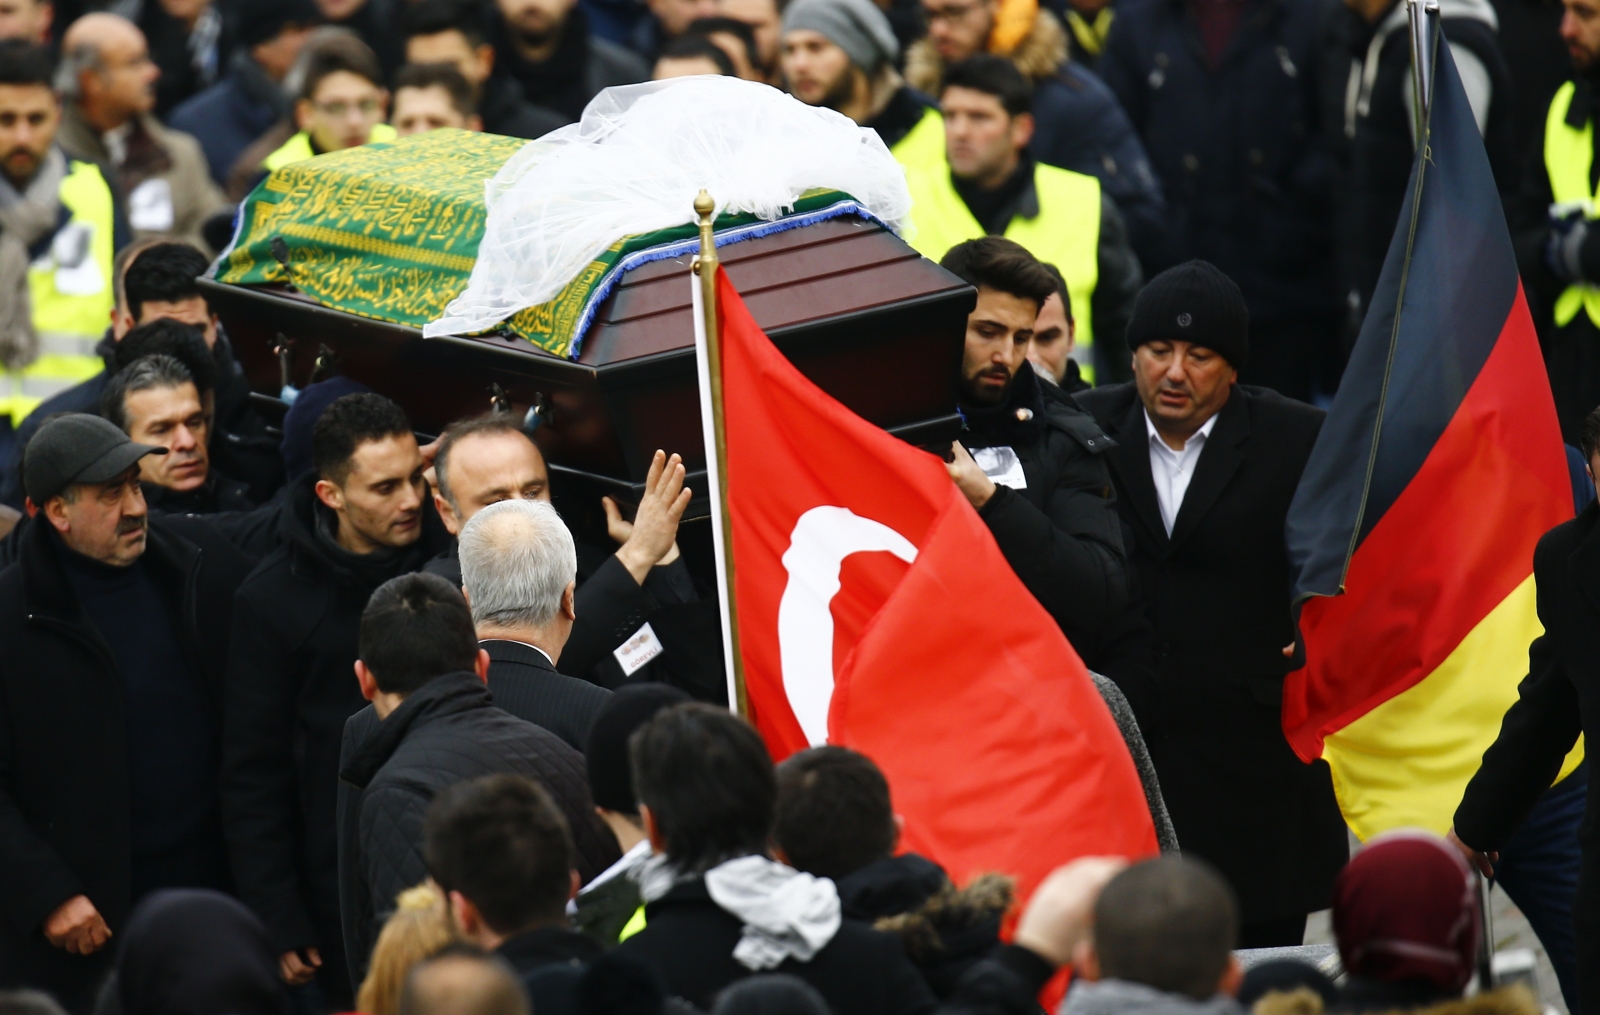 Tugce Albayrak Funerals McDonalds attack Germany